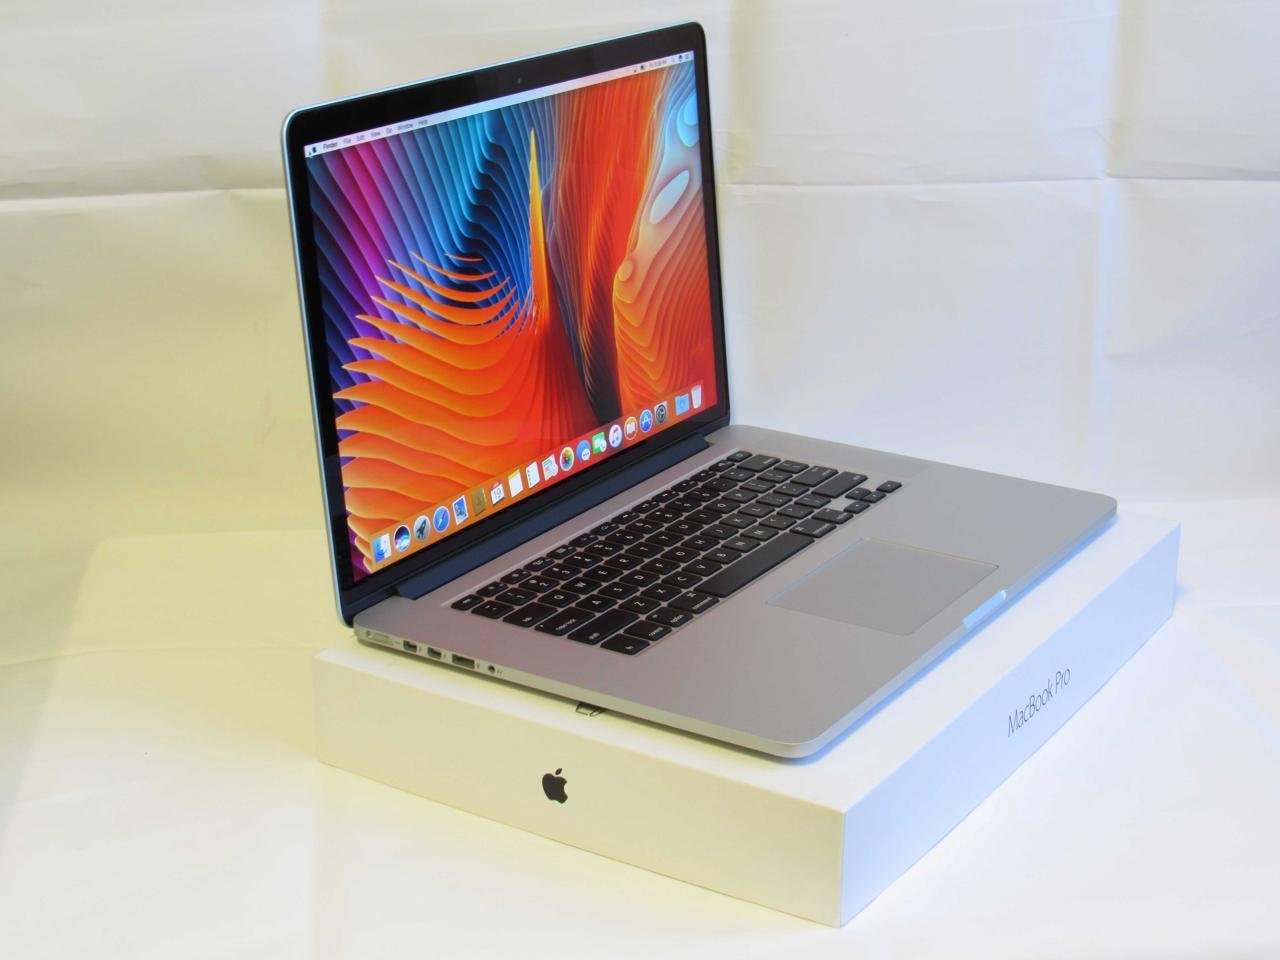 refurbished apple laptop 15 inch